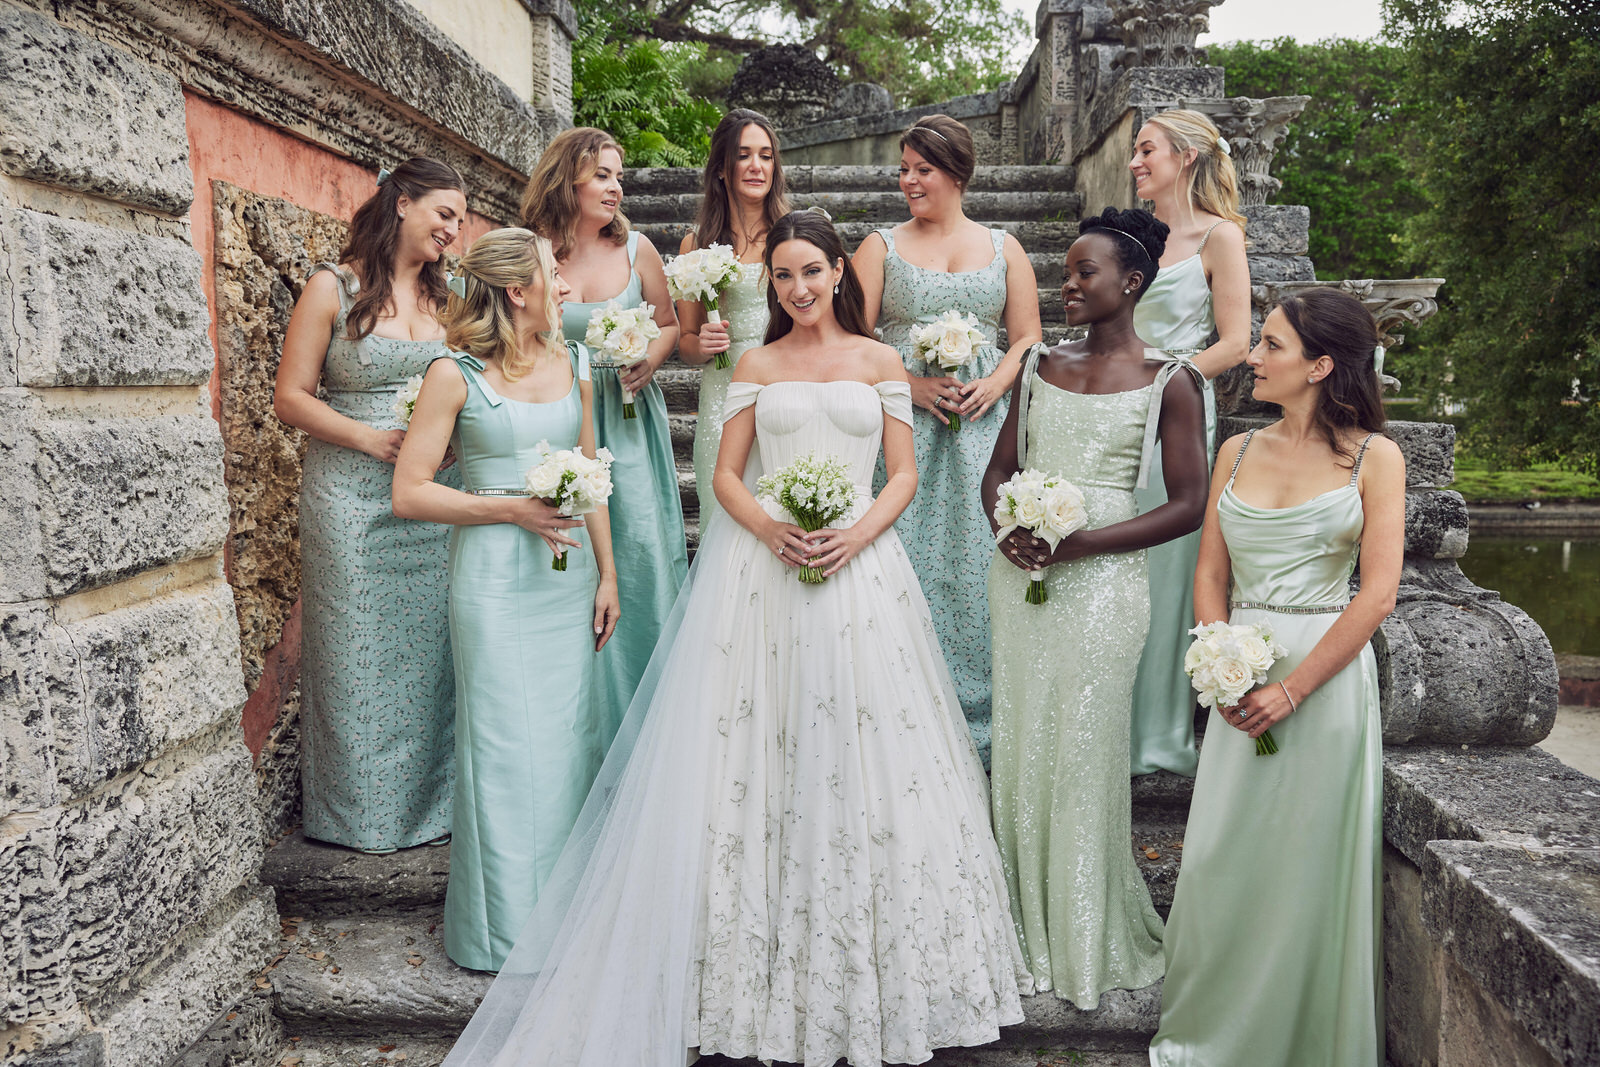 Jennifer Behr x Micaela Erlanger’s Dazzling Bridal Capsule Is Inspired by the Stylist’s Destination Wedding